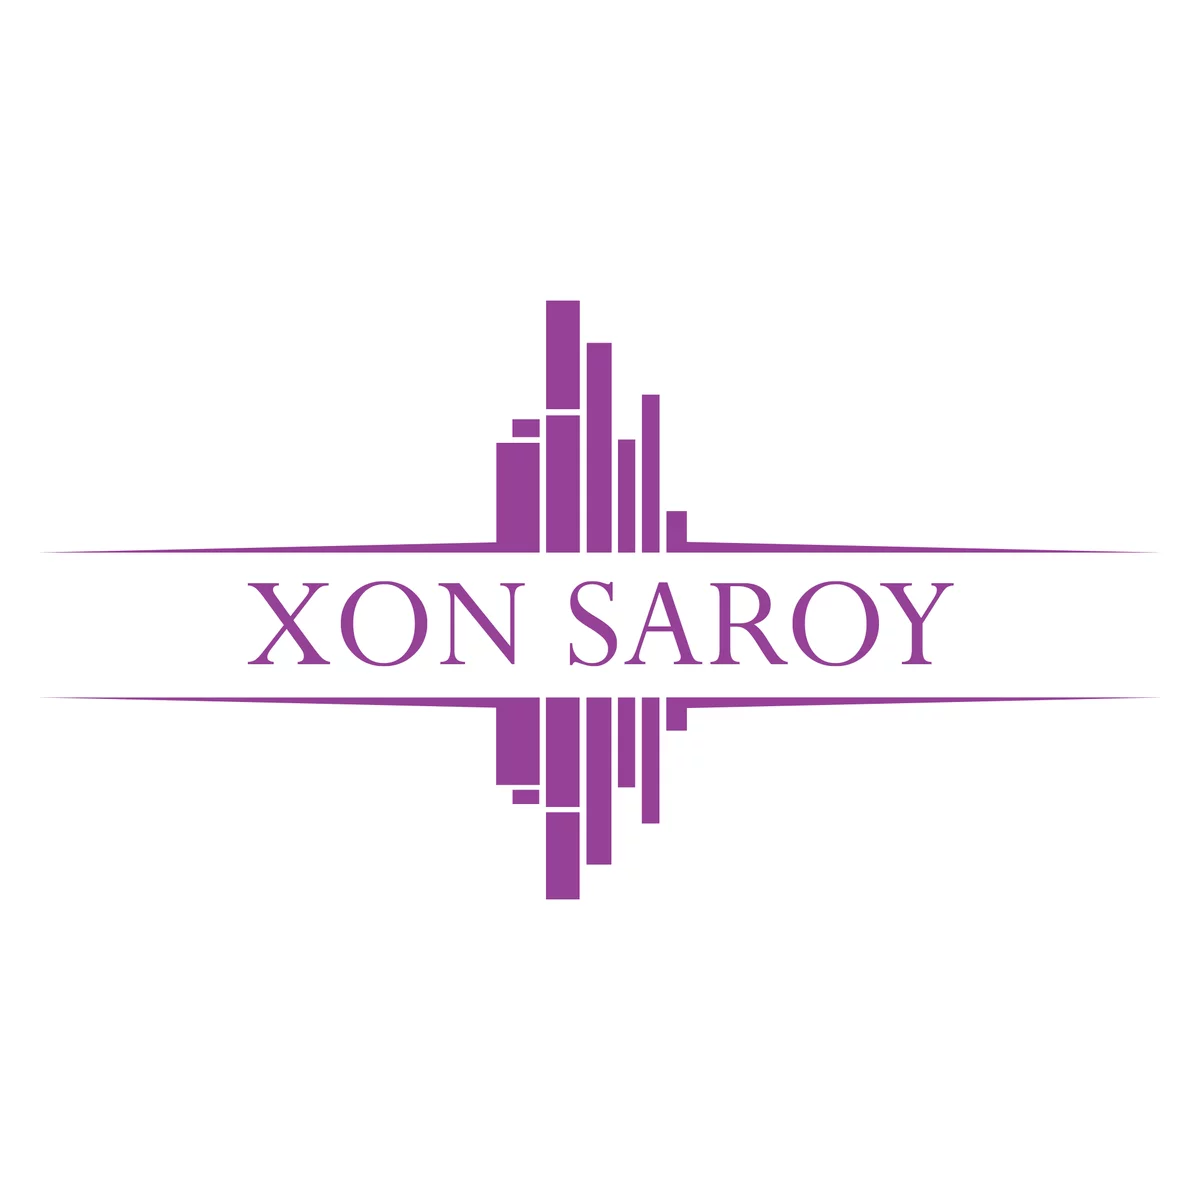 Xon Saroy